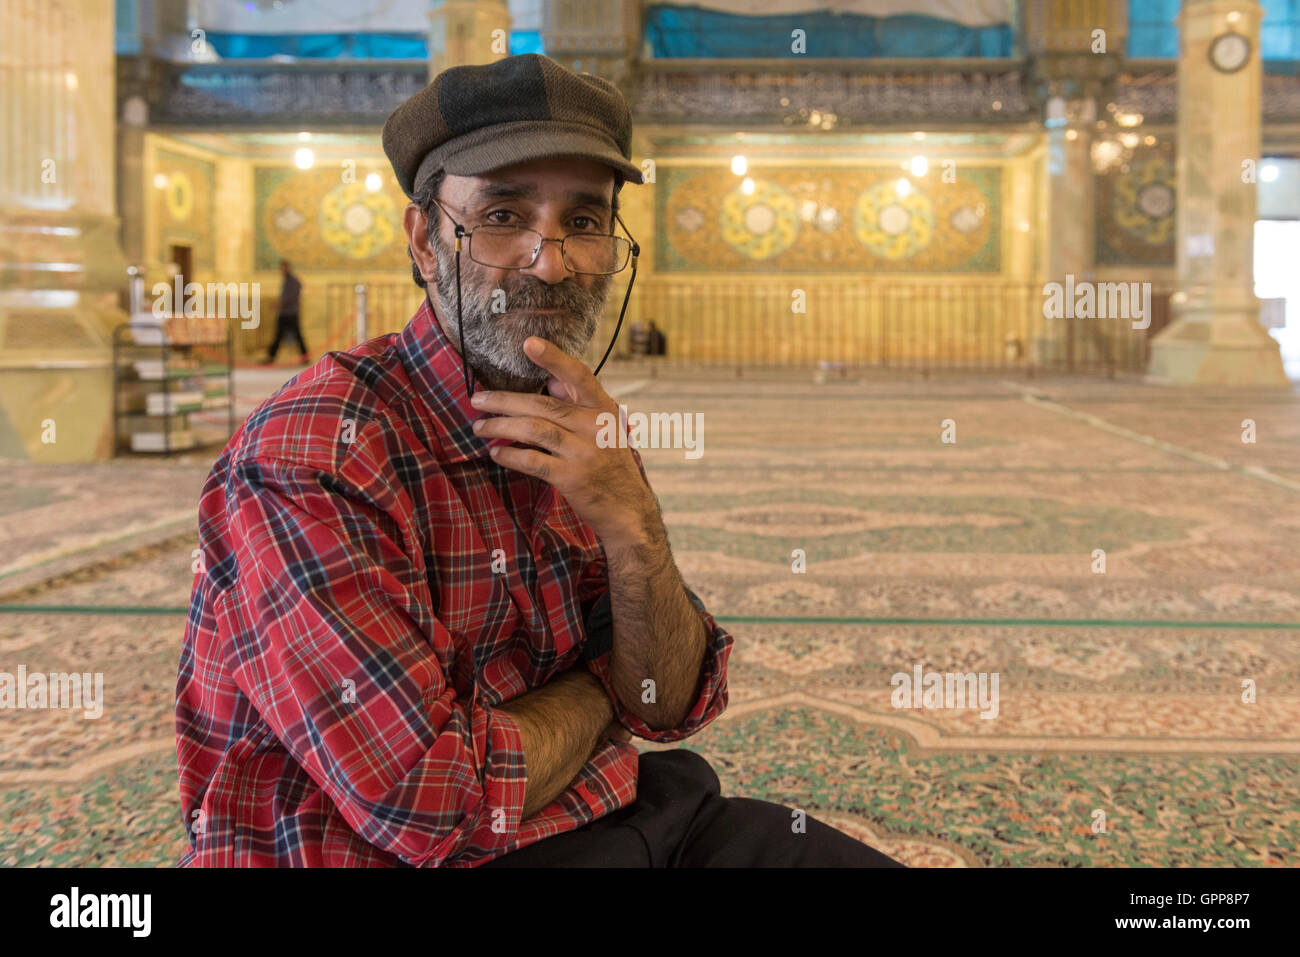 Qom, Emam Hasan Askari (Imam Hassan) Mosque, Man Meditating Stock Photo